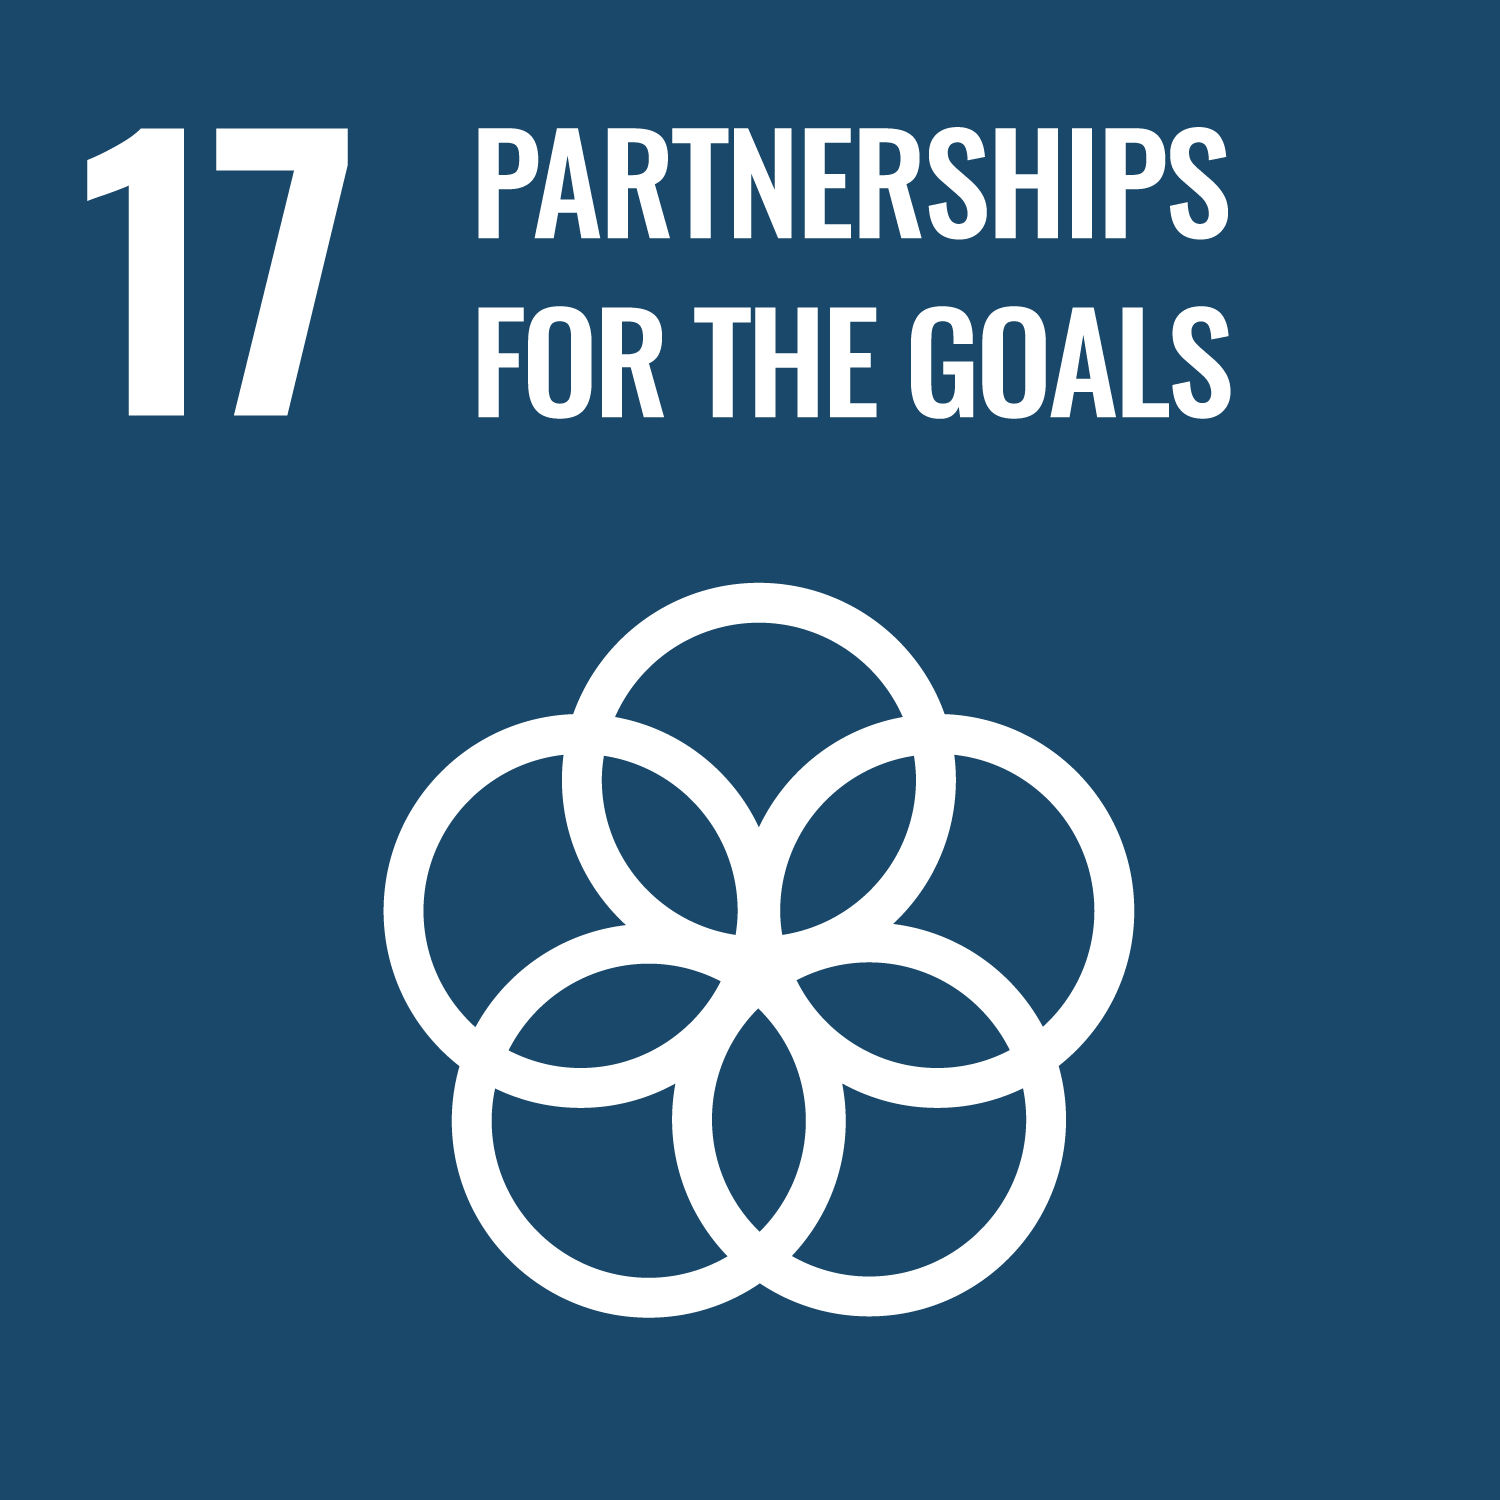 Partnerships for the Goals (UN SDG 17)